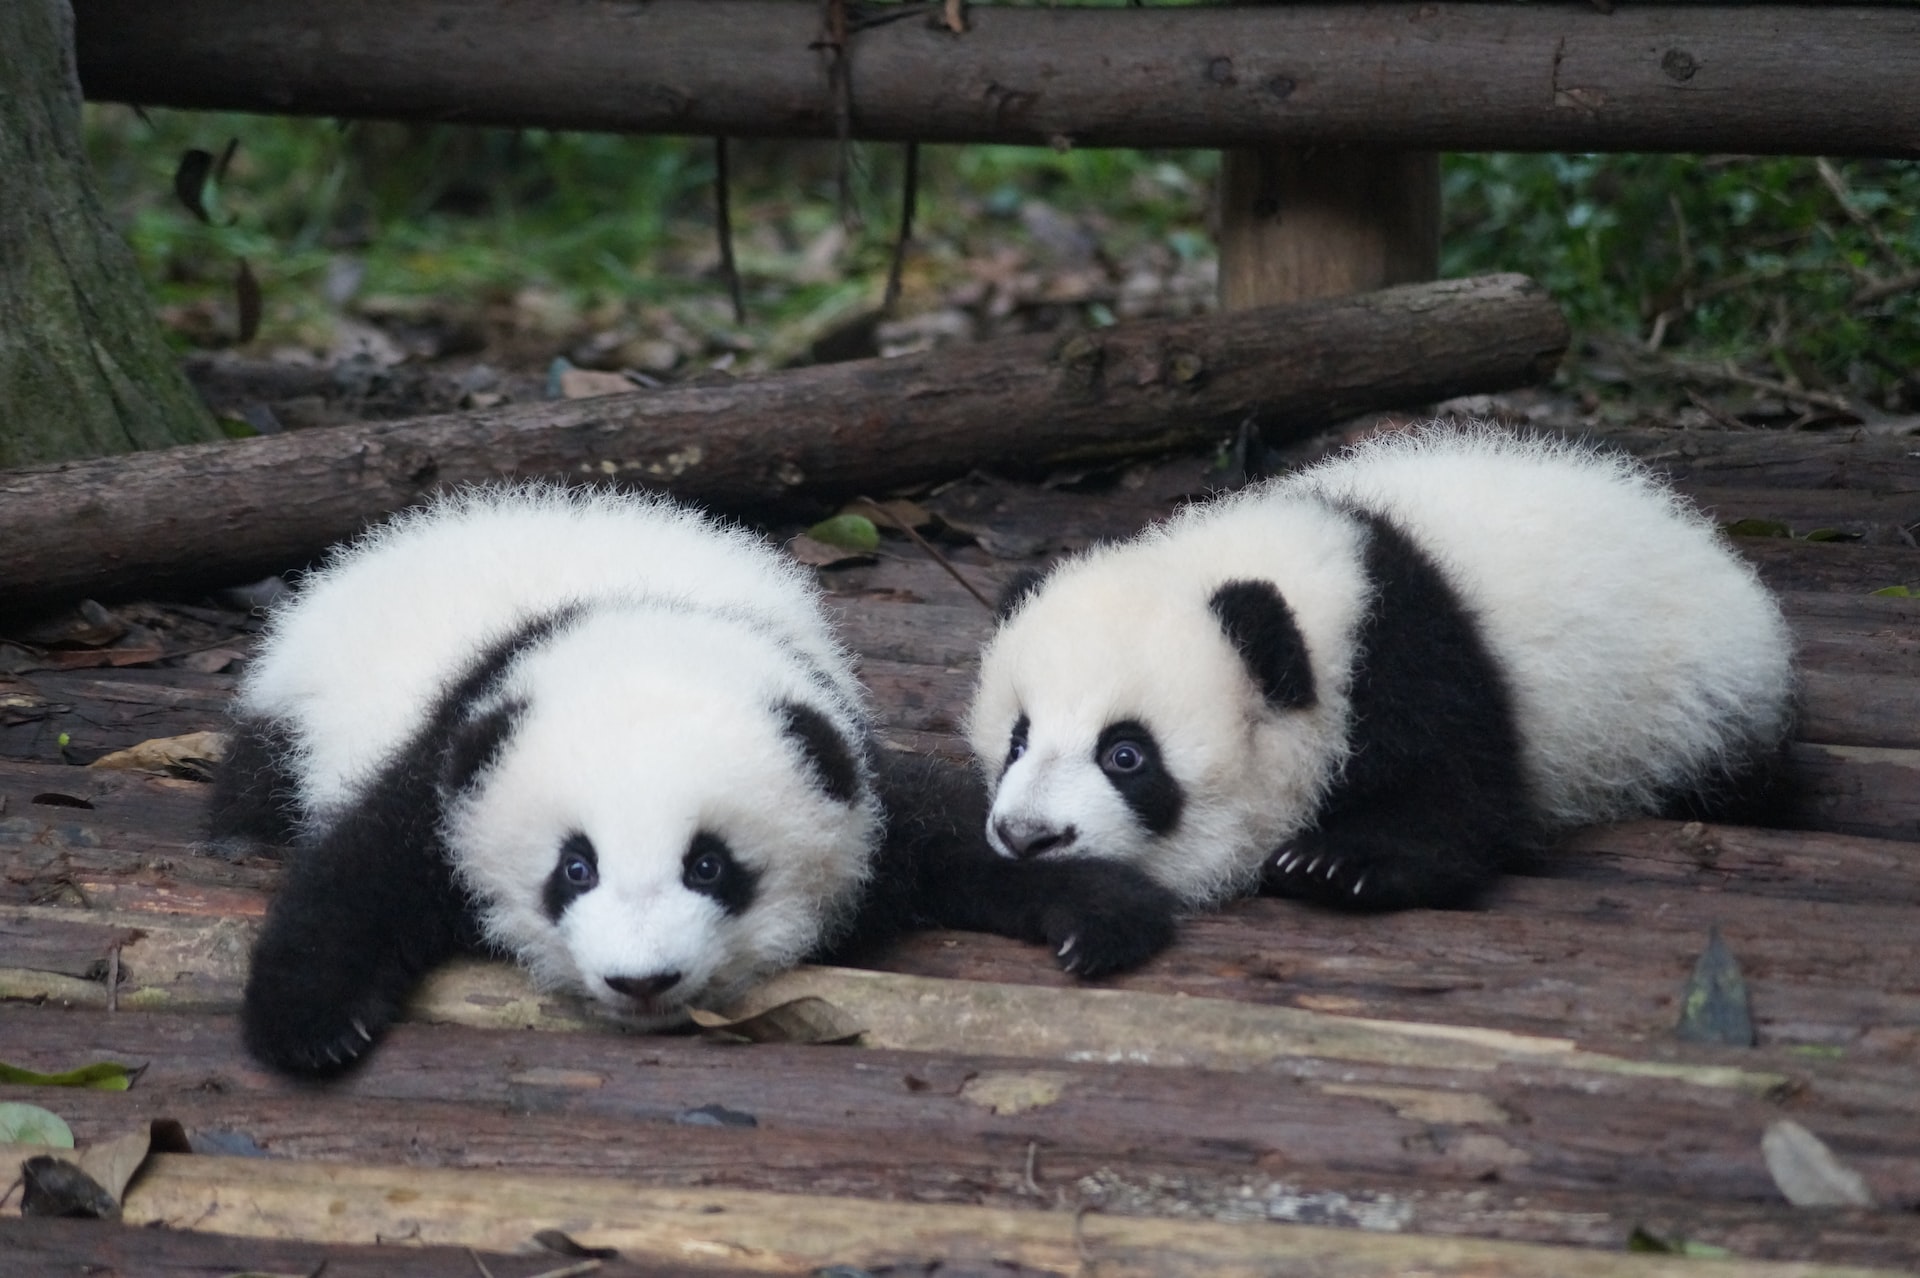 Chengdu Panda Breeding Research Center, Chengdu, China